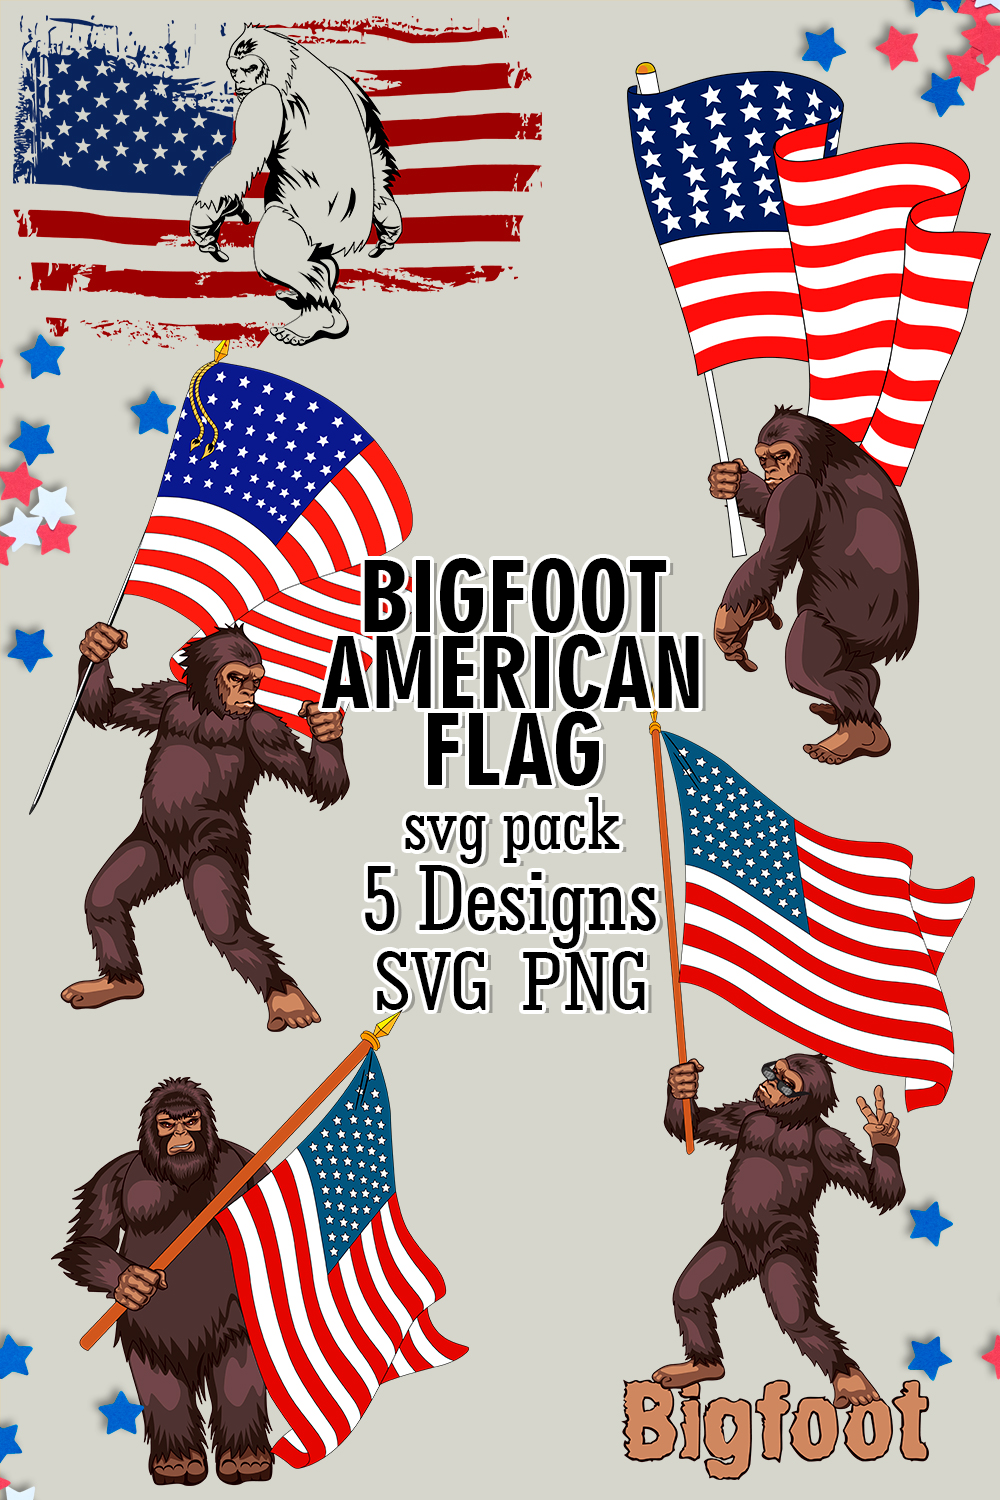 Bigfoot American Flag Svg - Pinterest.